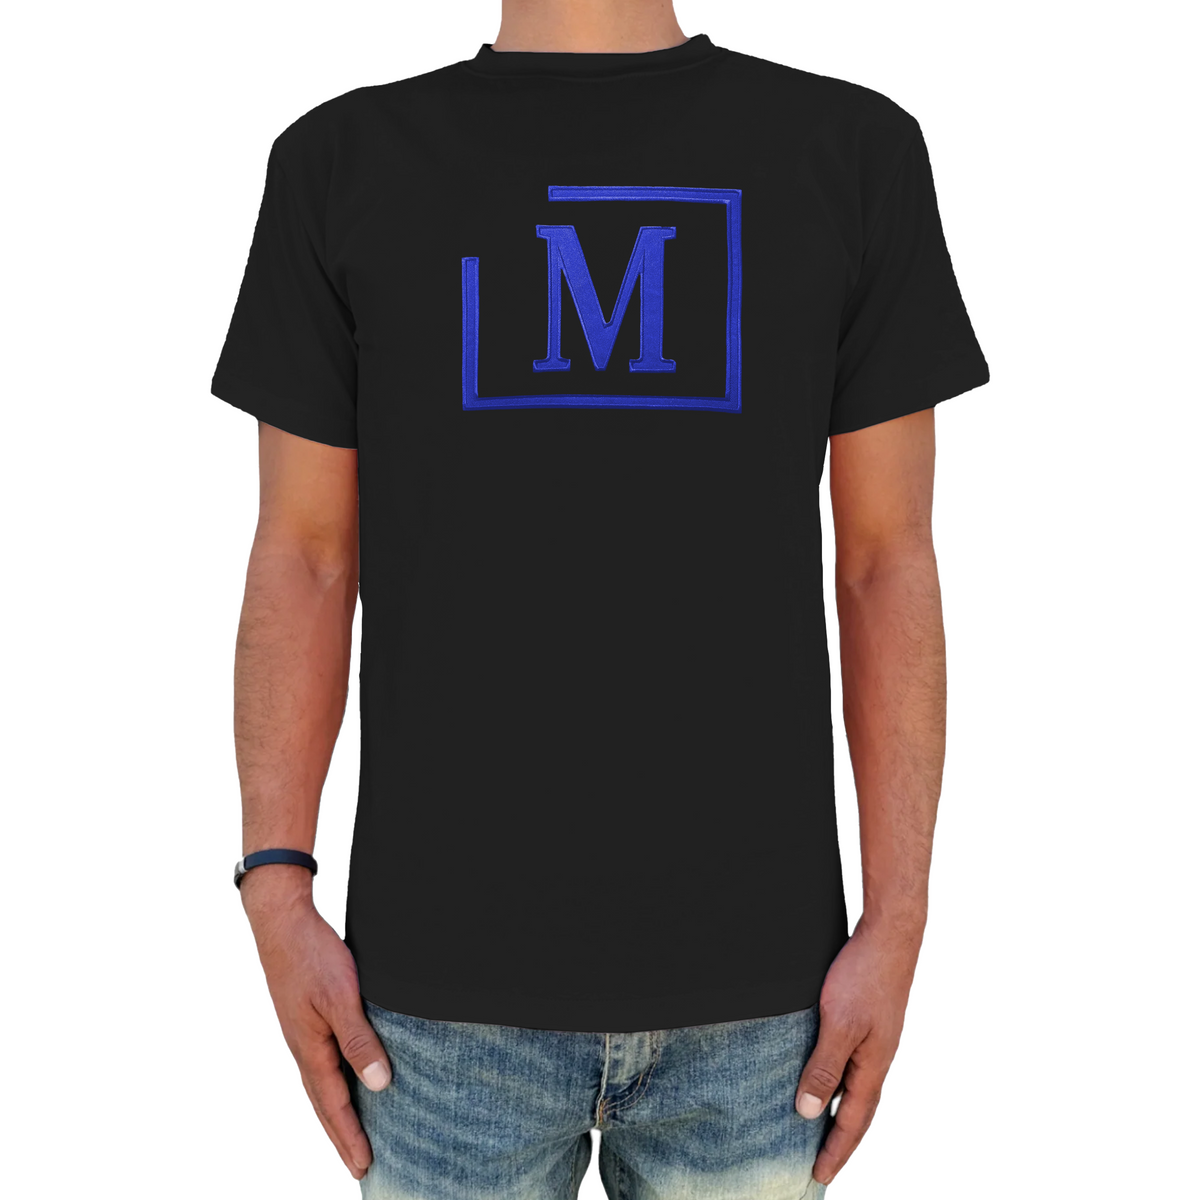 MDB Brand Men's Classic M Embroidered Logo Tee - Black